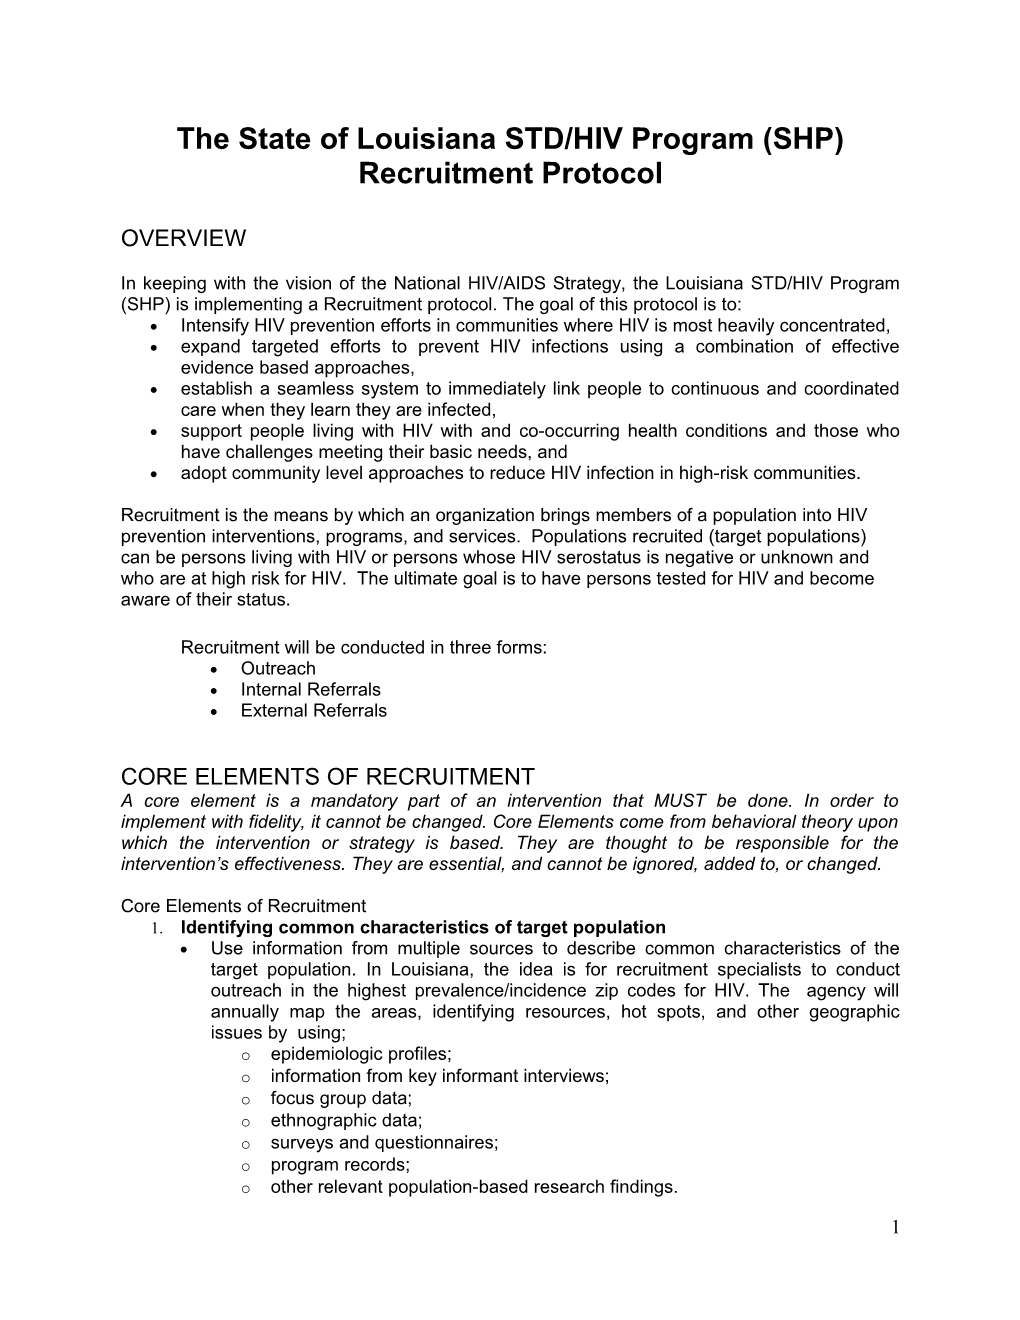 The State of Louisiana STD/HIV Program (SHP) Recruitment Protocol